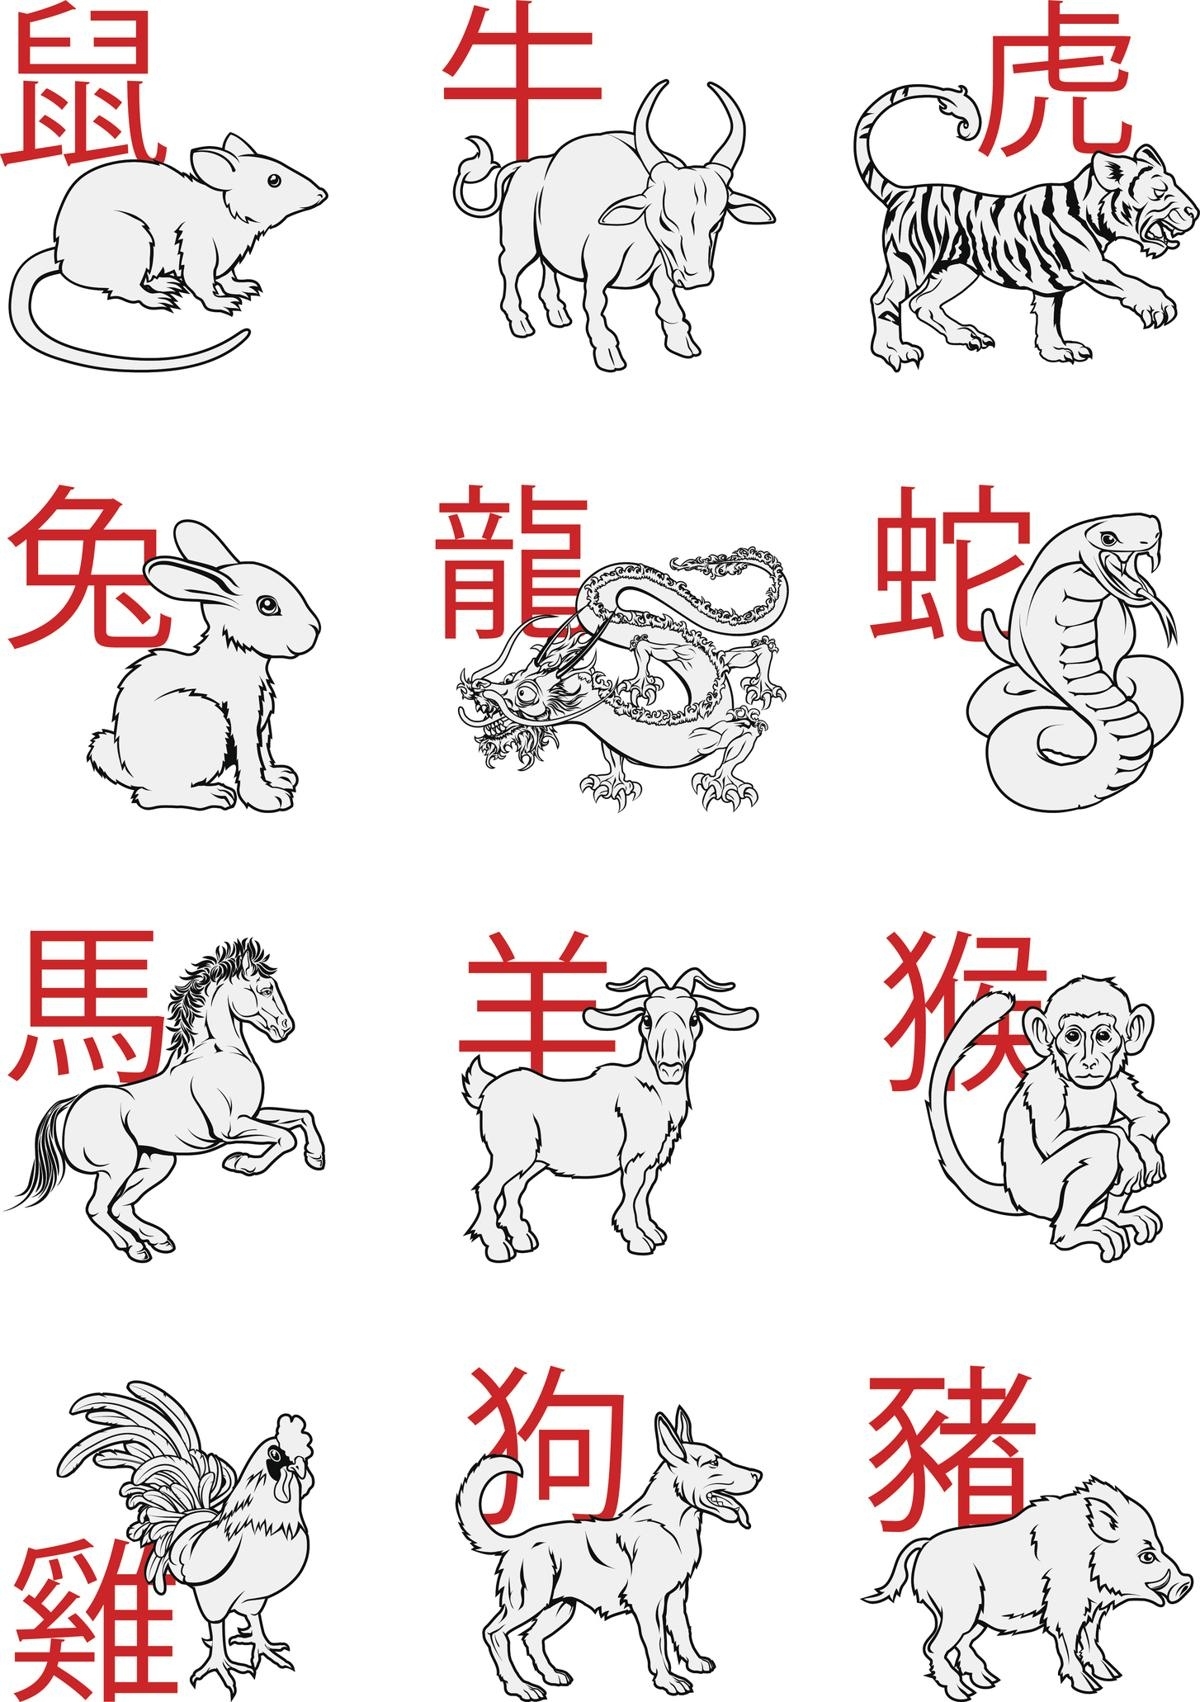 Japanese Zodiac Calendar - Astrology Bay Japanese Calendar Zodiac Signs